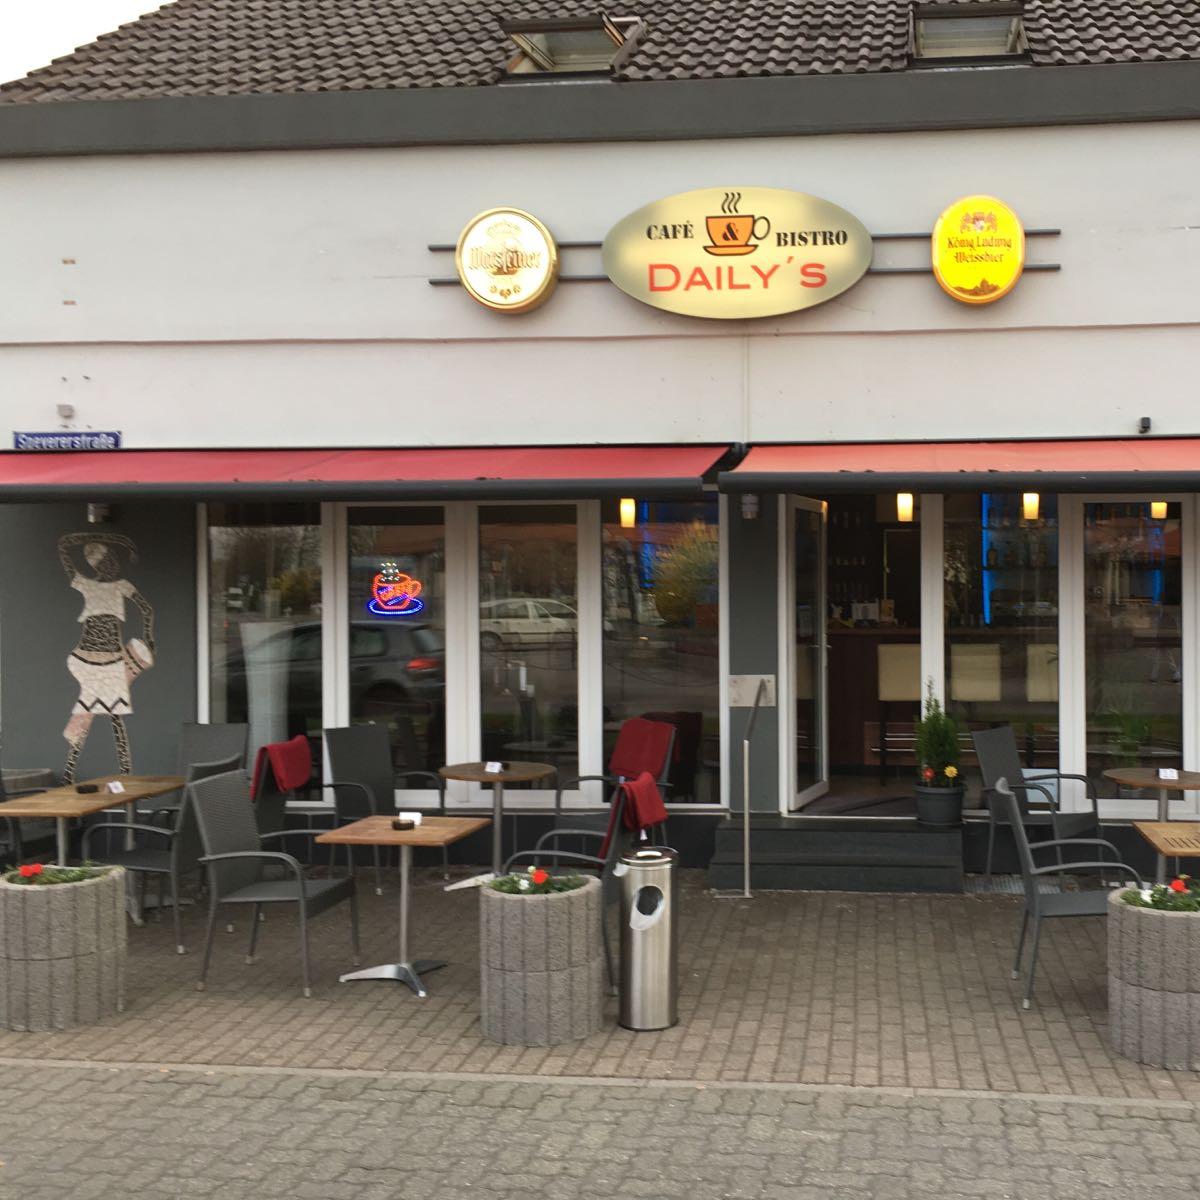 Restaurant "Café Bistro Daily’s" in Limburgerhof